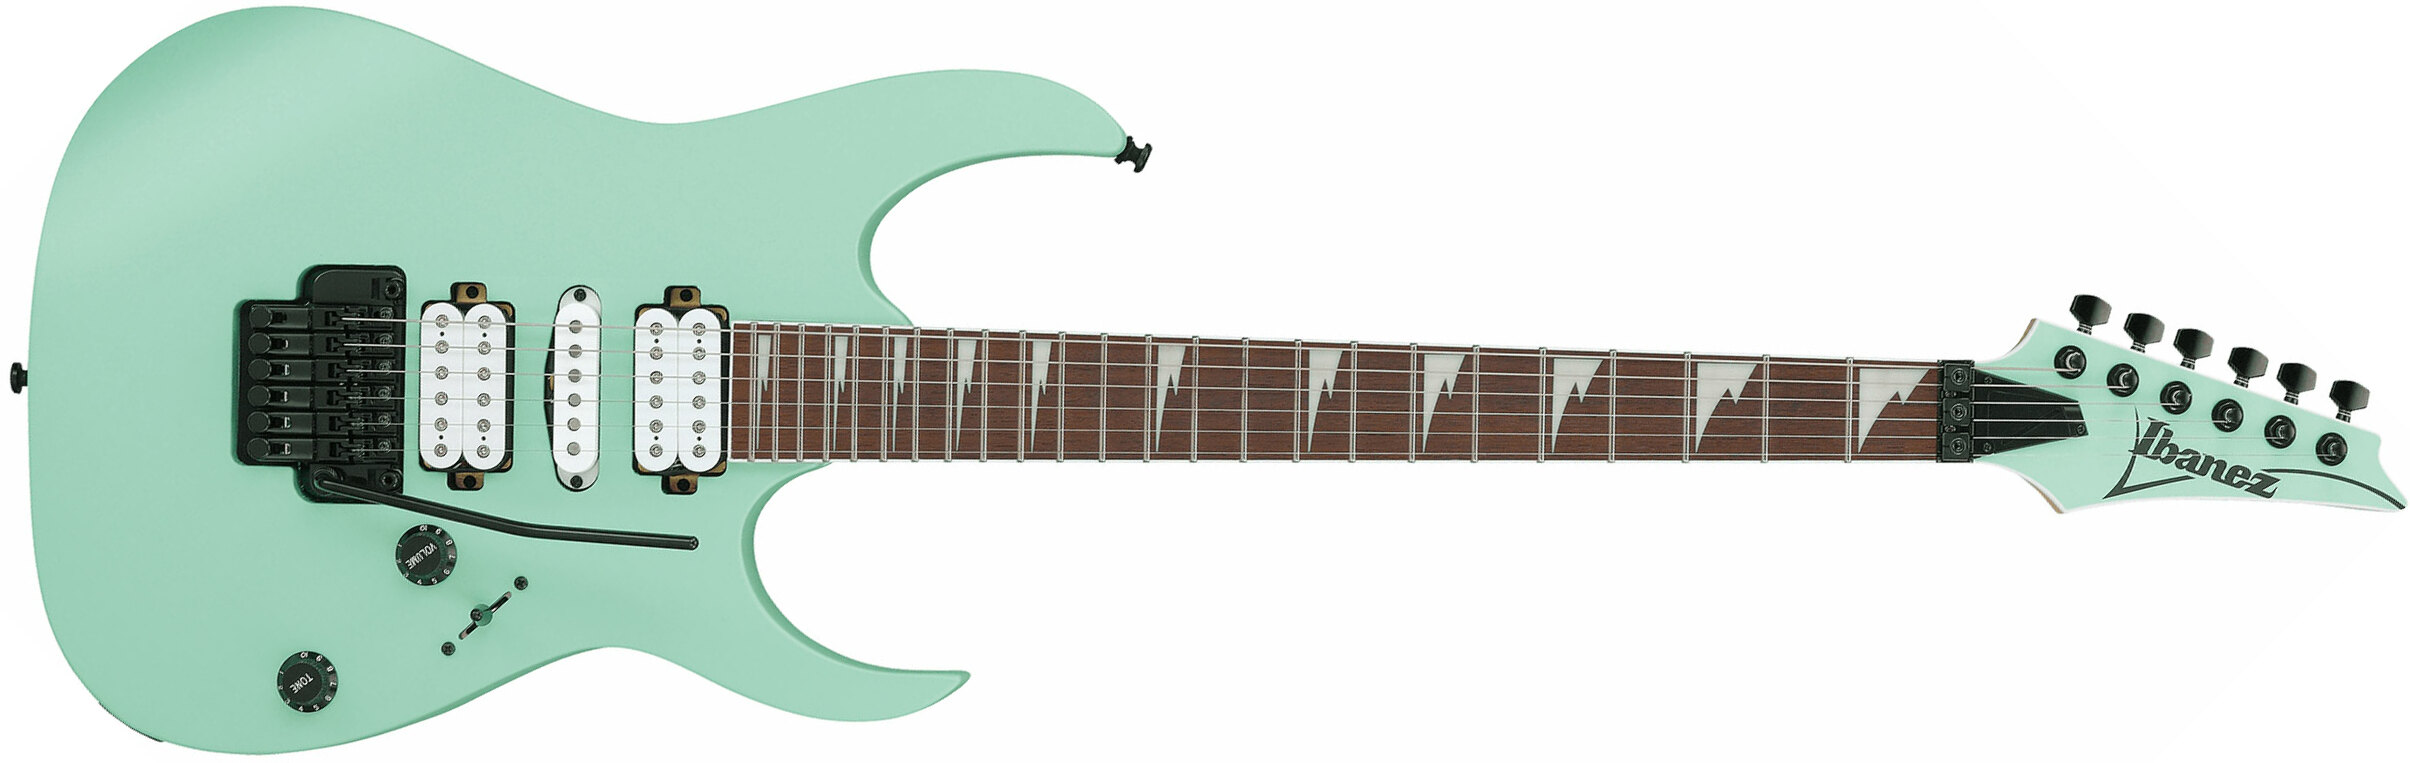 Ibanez Rg470dx Sfm Standard Hsh Fr Jat - Sea Foam Green Matte - Guitarra eléctrica con forma de str. - Main picture